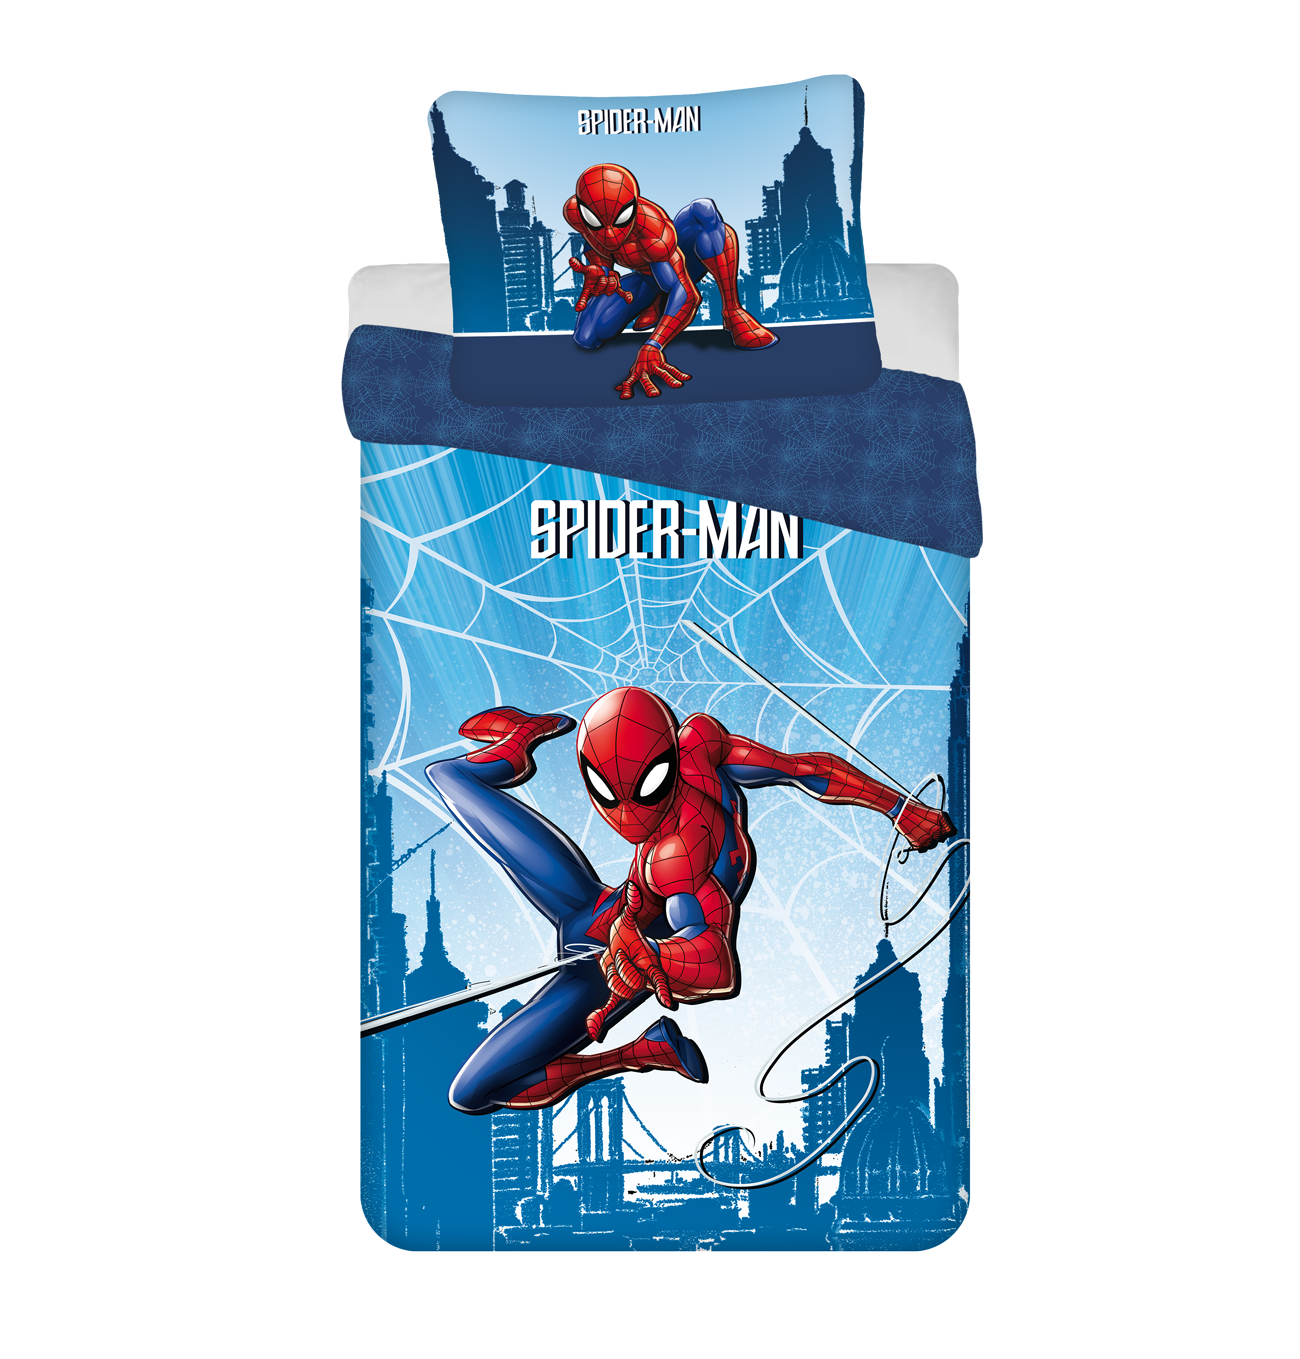 Spiderman Duvet cover Spider Sense - Single - 140 x 200 cm - Cotton